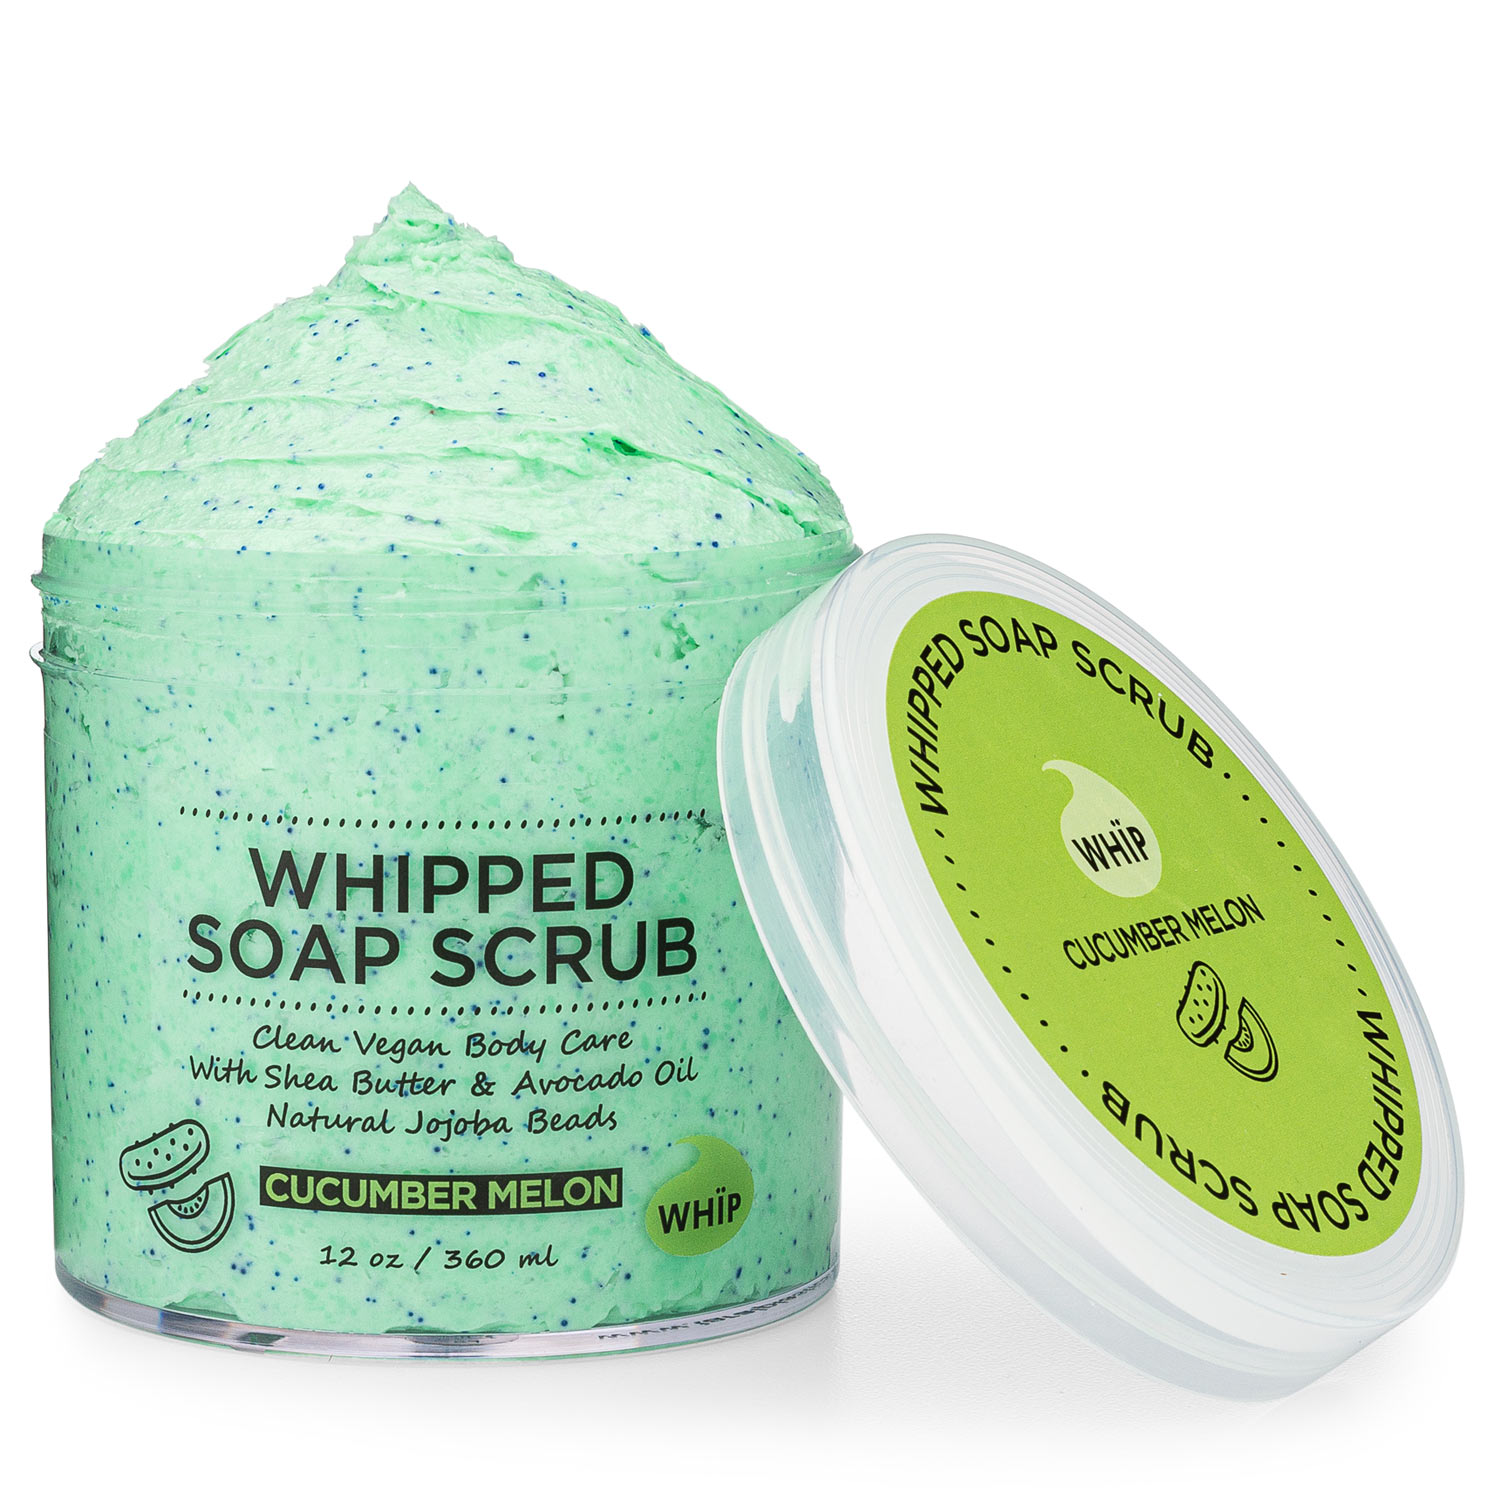 Whipped Soap Scrub - Cucumber Melon WHÏP Image